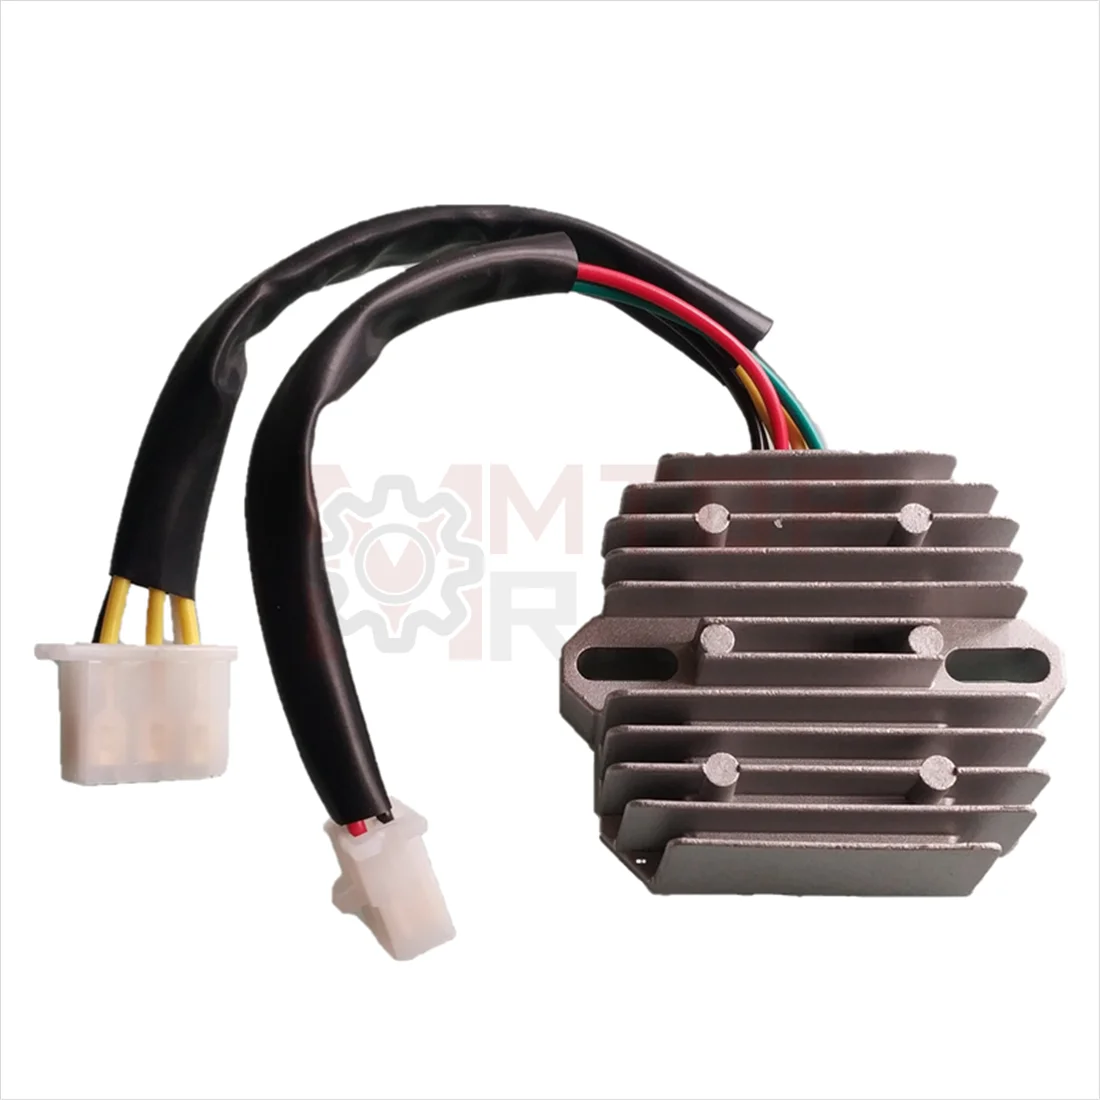 

Regulator Rectifier Connector Plug For Honda CB650 1979-1982 CBX750F/F2 1984-1986 CBX400 1995 31600-460-731 31600-MJO-612